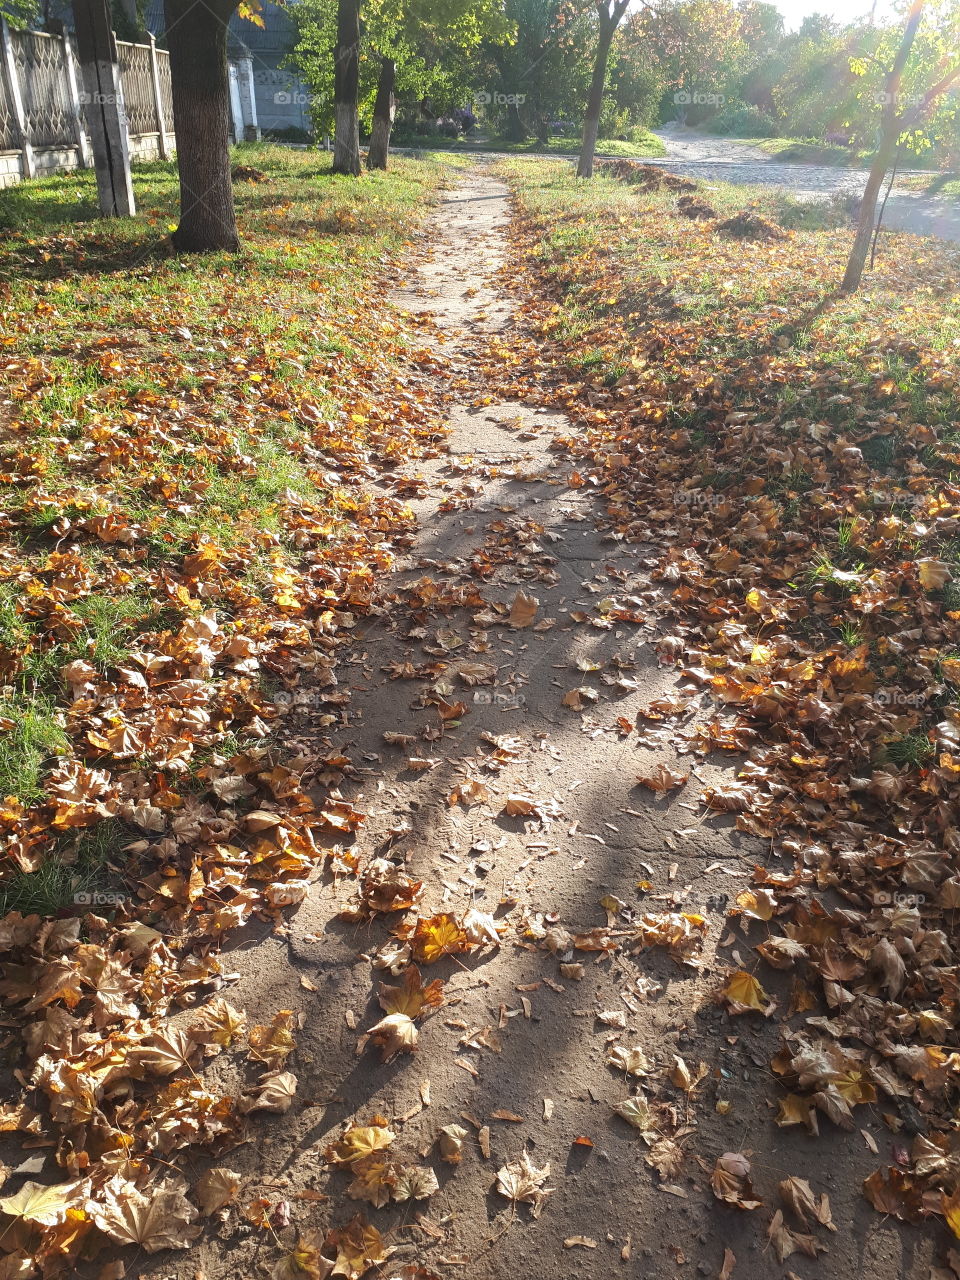 Autumn walkway